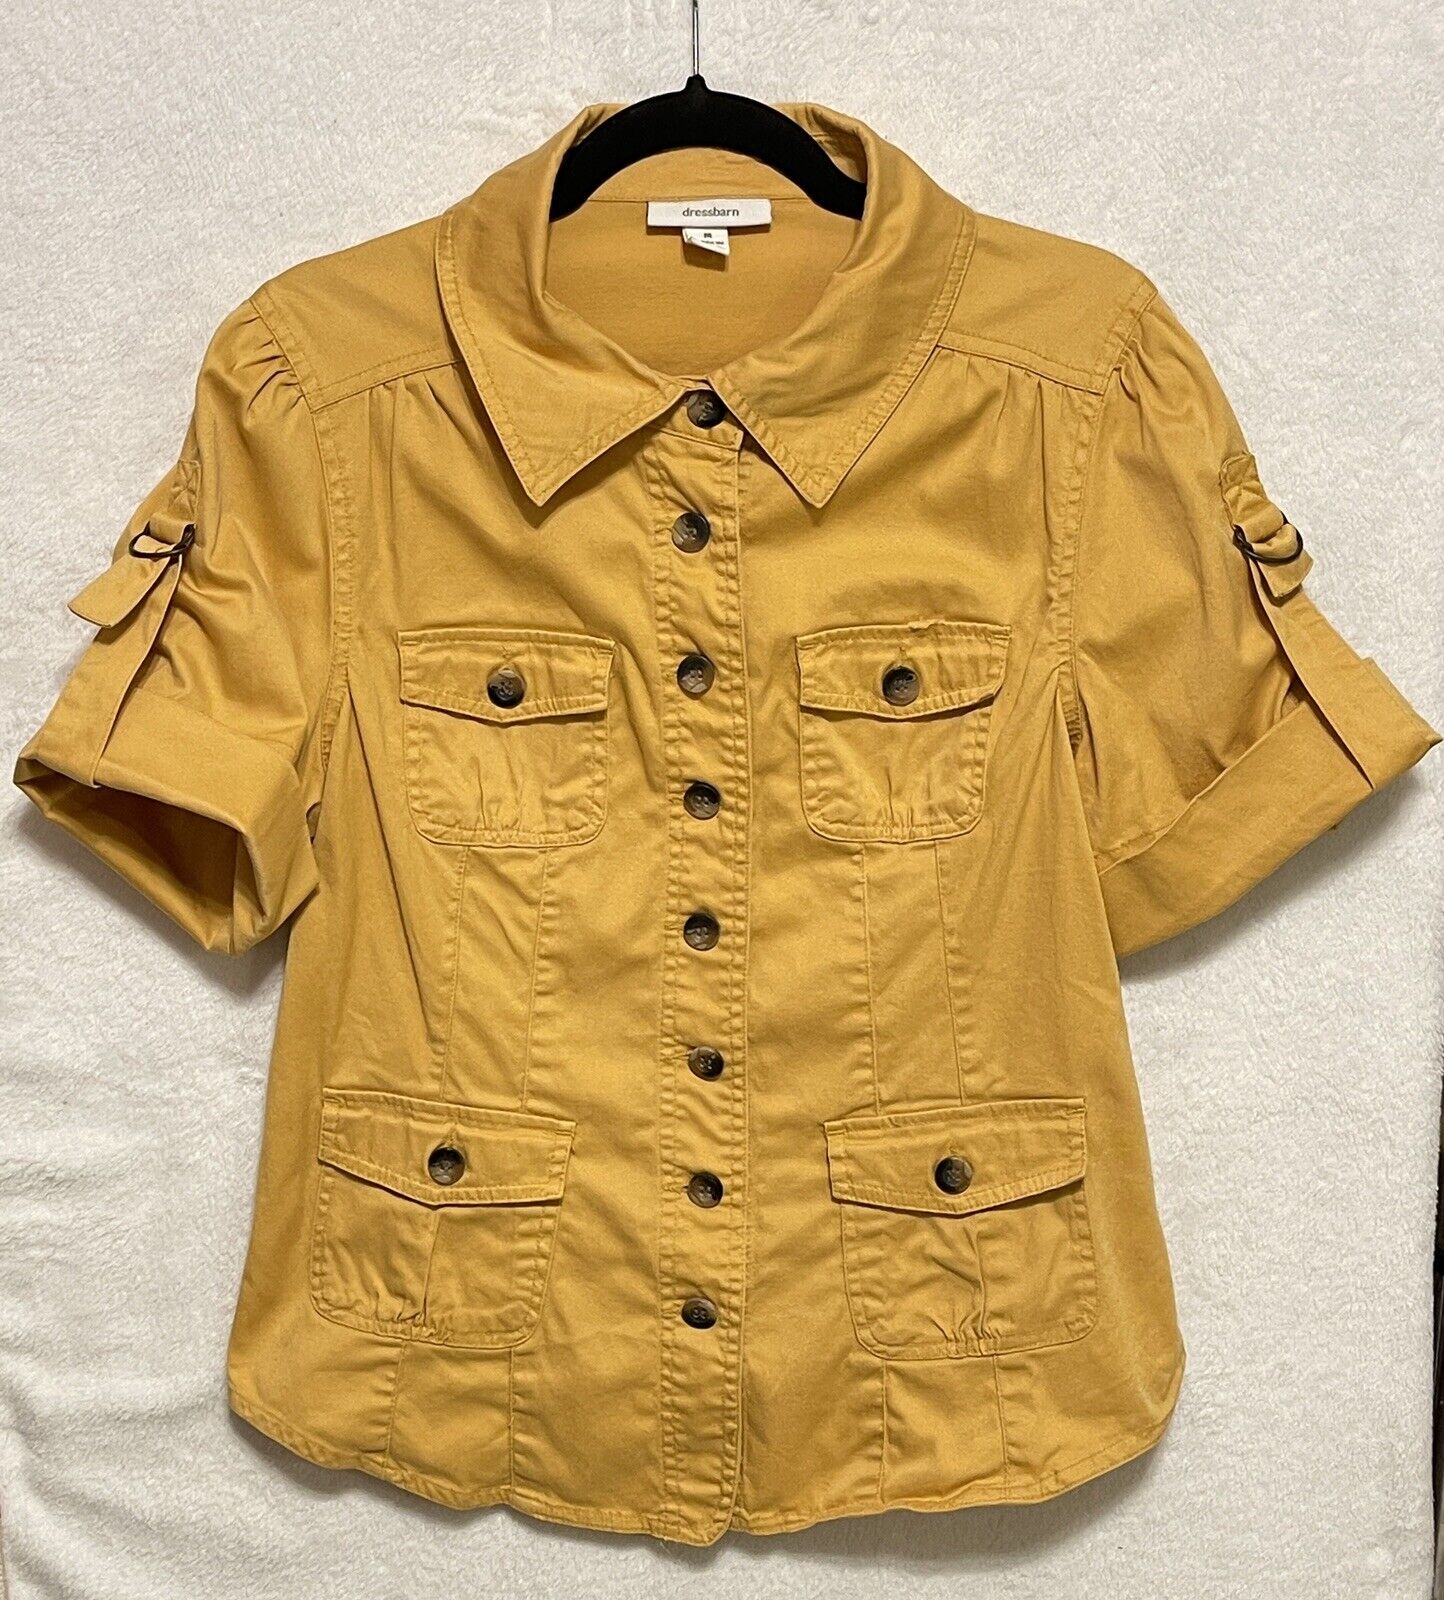 Dress Barn Womens Size M Shirt Shacket Field Jacket Short Sleeve Top